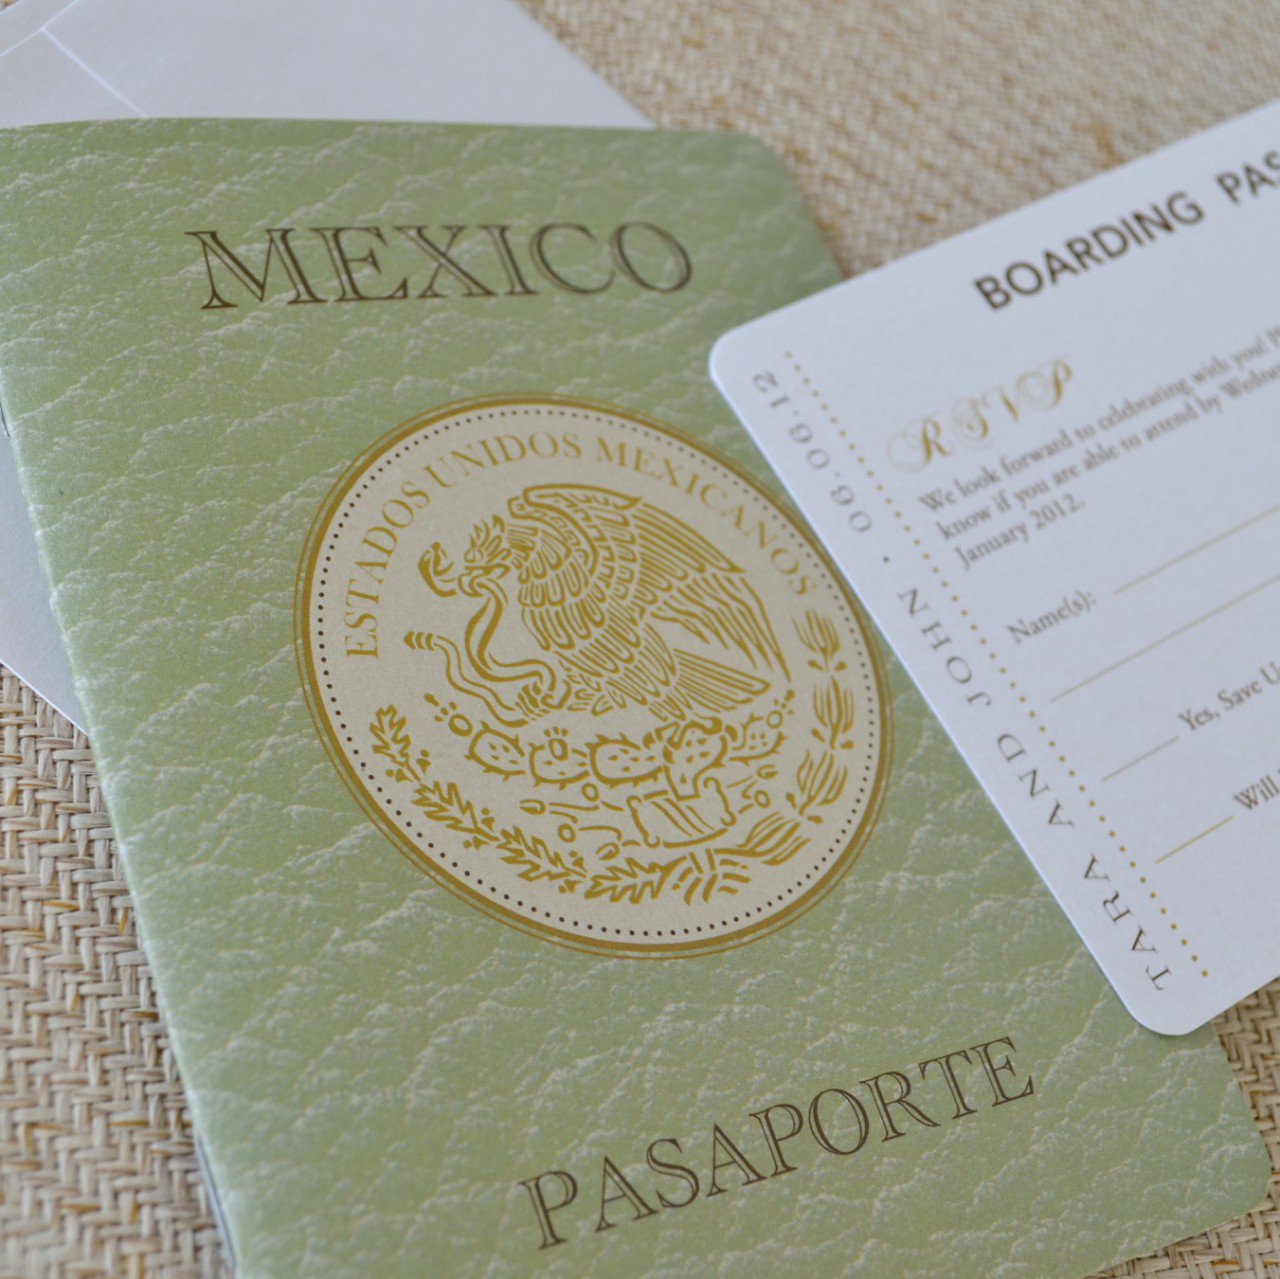 Mexico Passport Wedding Invitations